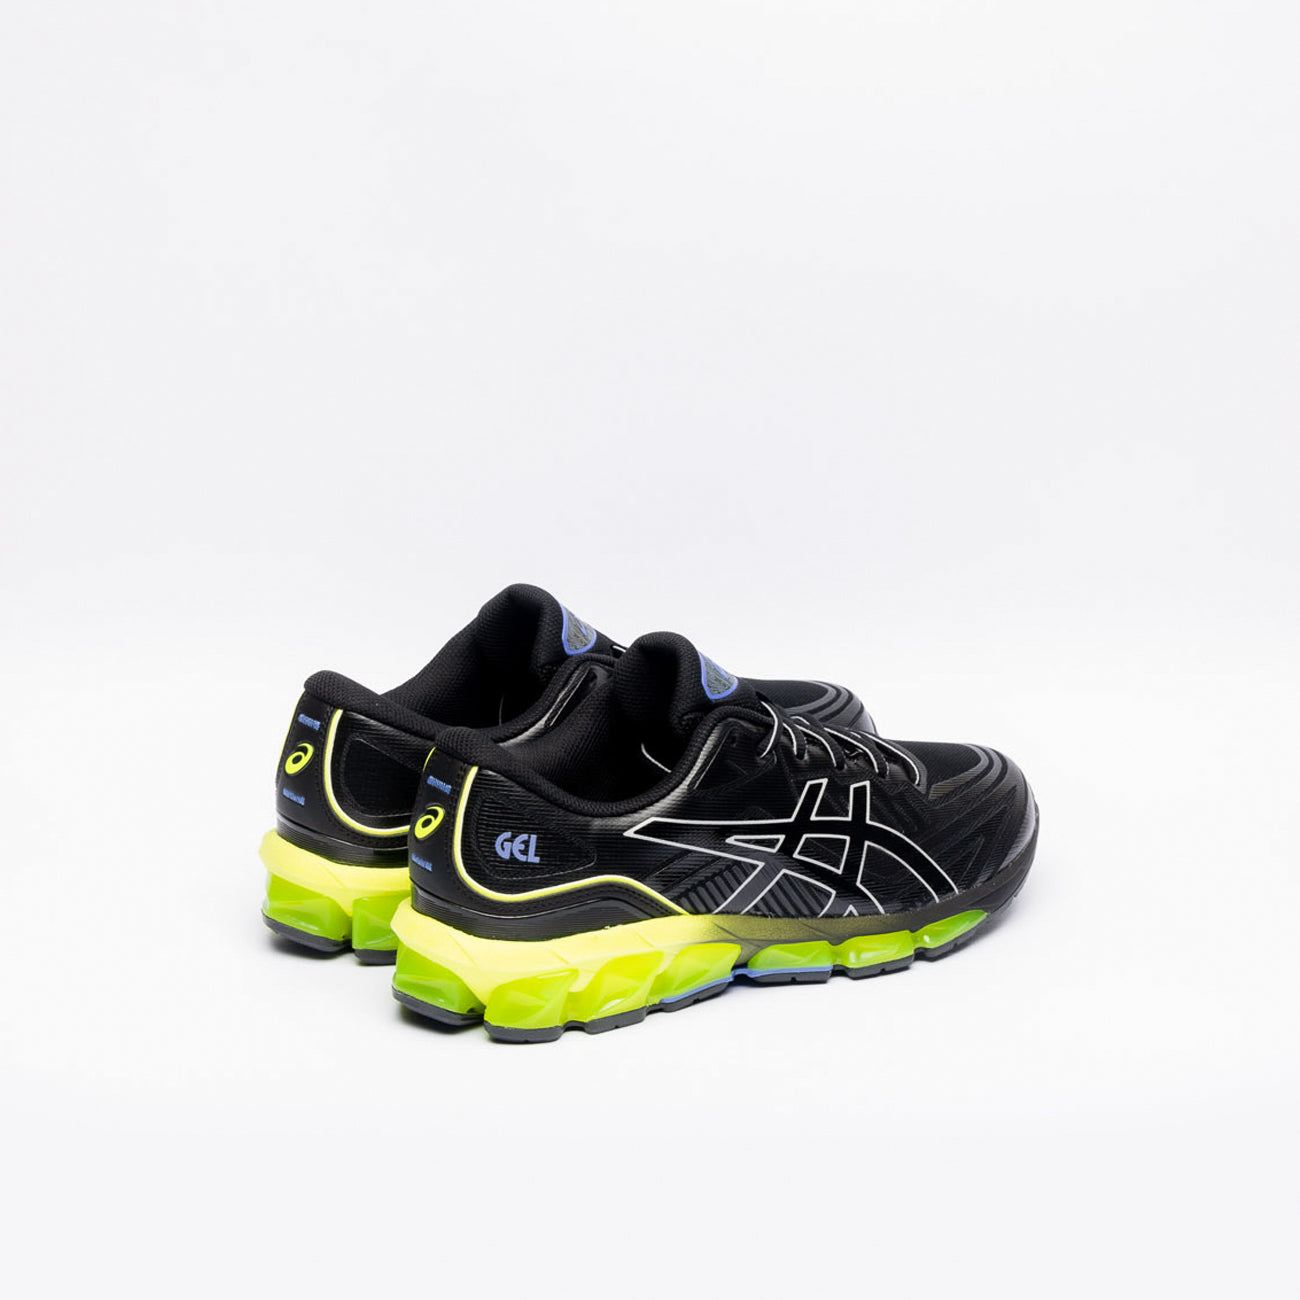 Sneaker Asics Gel Quantum 360 VII in tessuto nero e gel giallo fluo